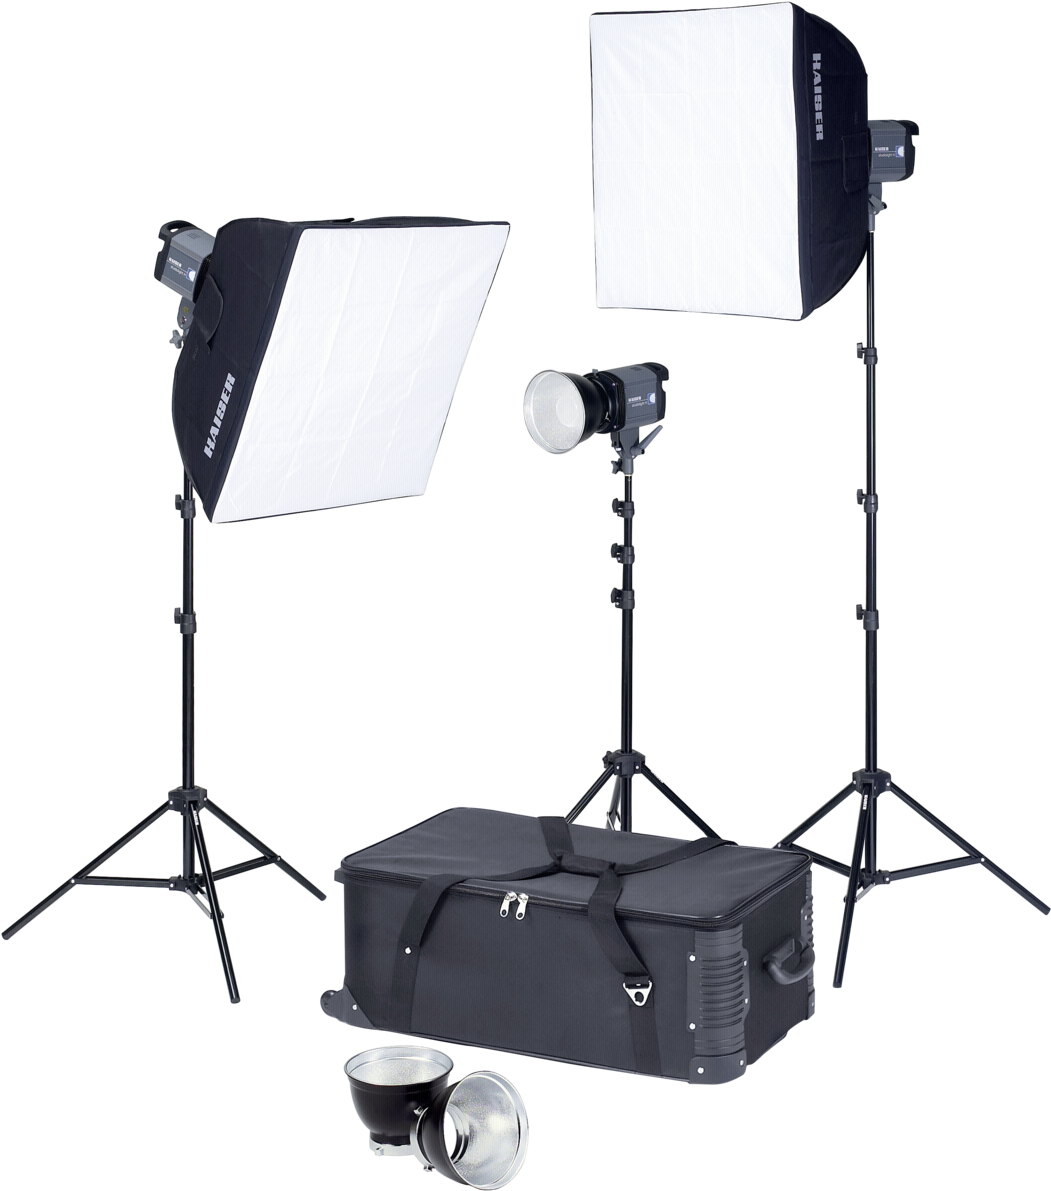 Professional Photography Lighting Equipment Setup